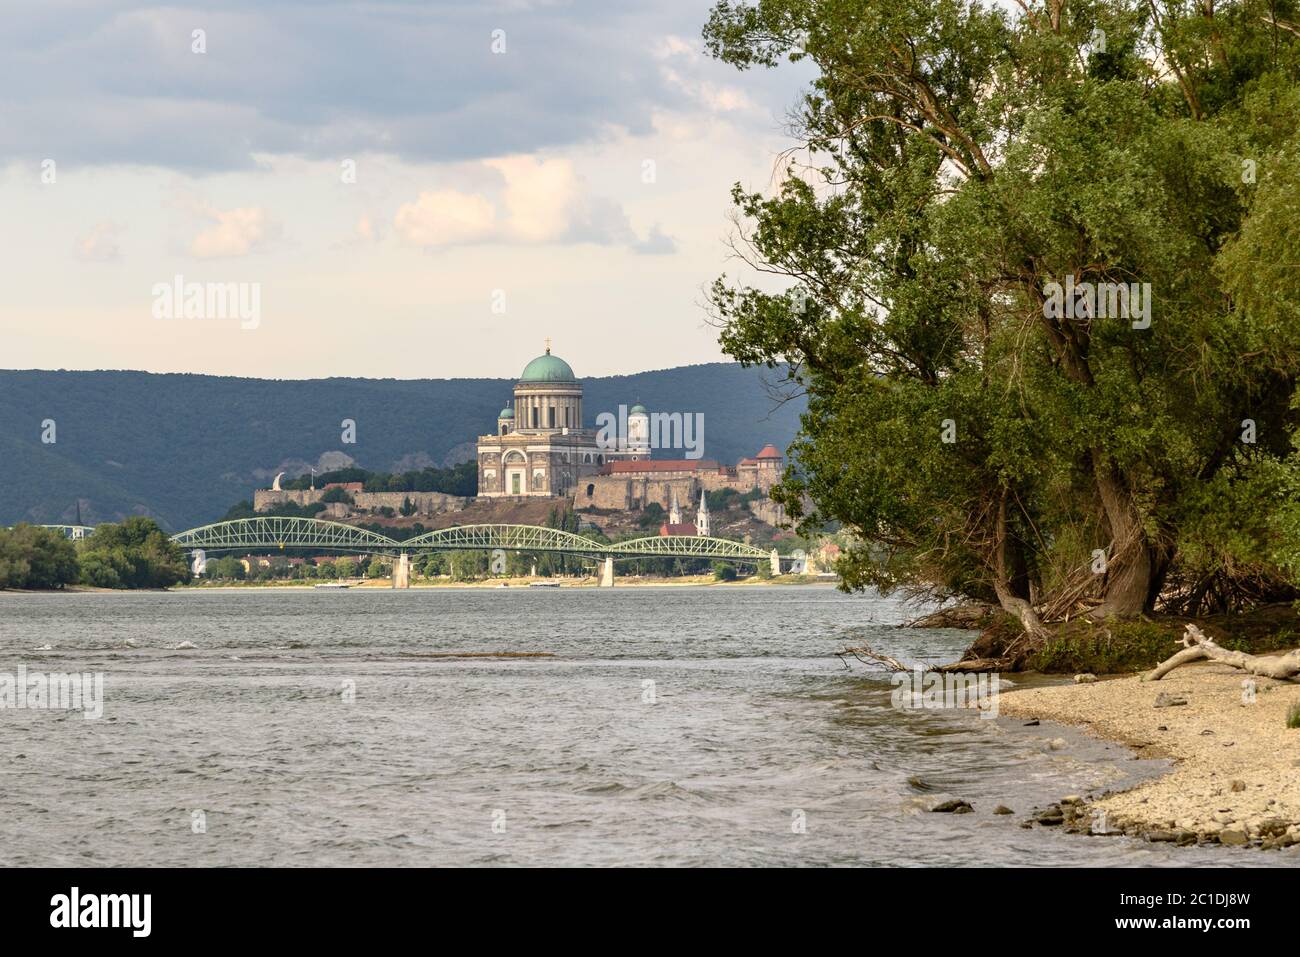 The Maria Valeria bridge spanning the Danube River with the Esztergom Basilica in the background Stock Photo